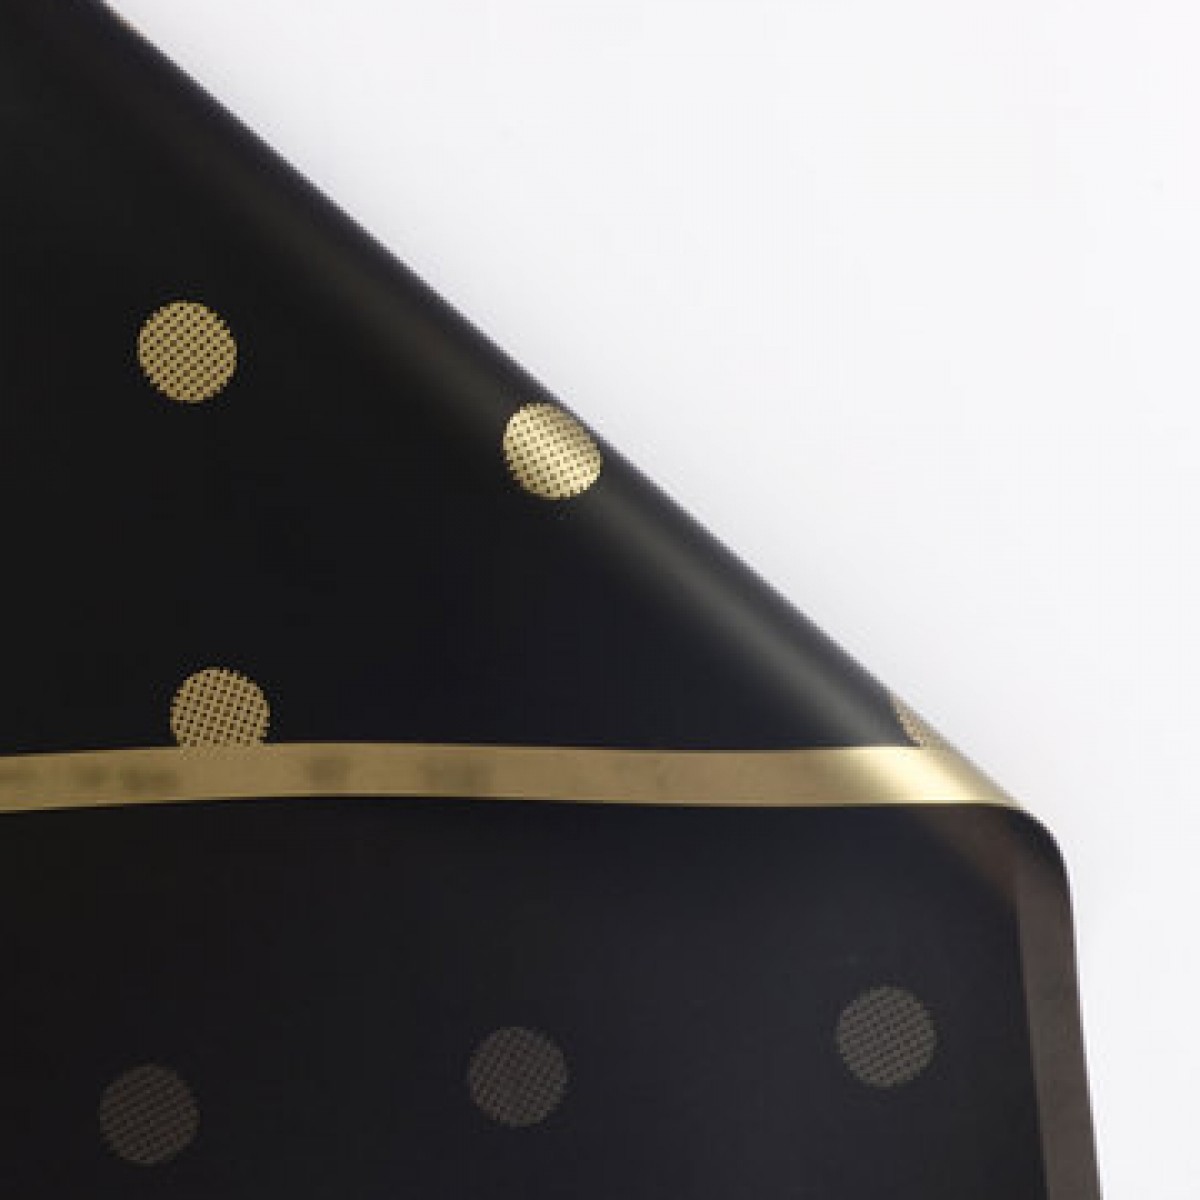 7623 Black & Gold Polka Dot with Border Film 58cmx58cm Sheet (20 Sheets) 